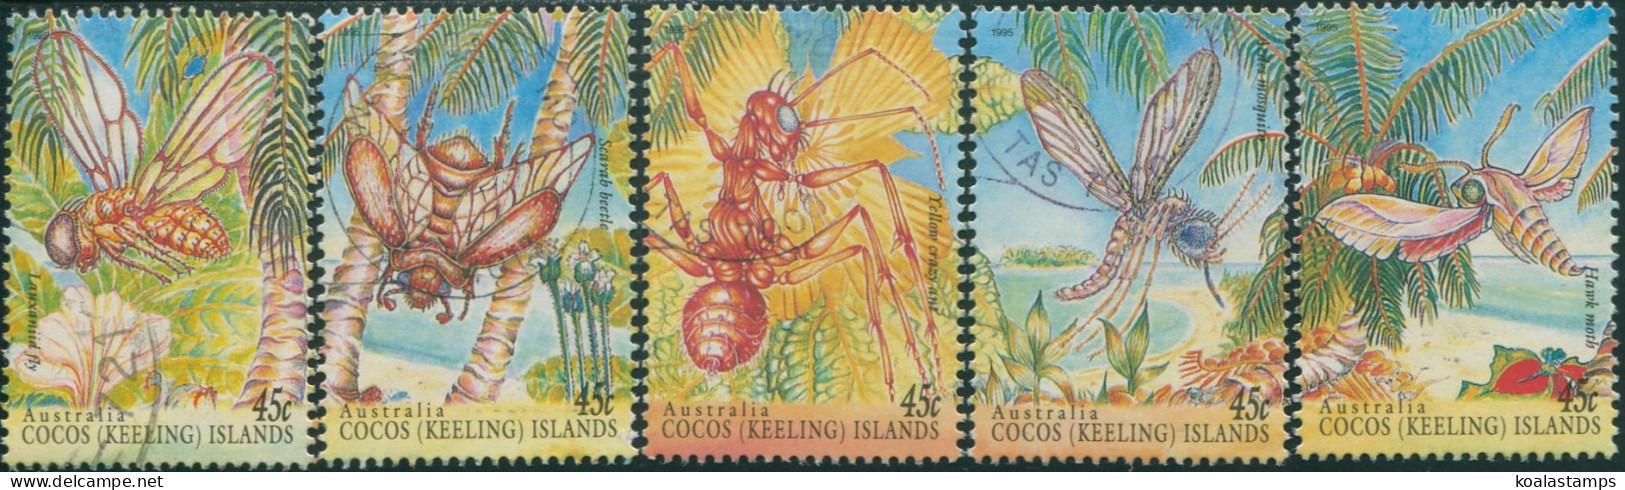 Cocos Islands 1994 SG326 Insects Part Set FU - Cocoseilanden